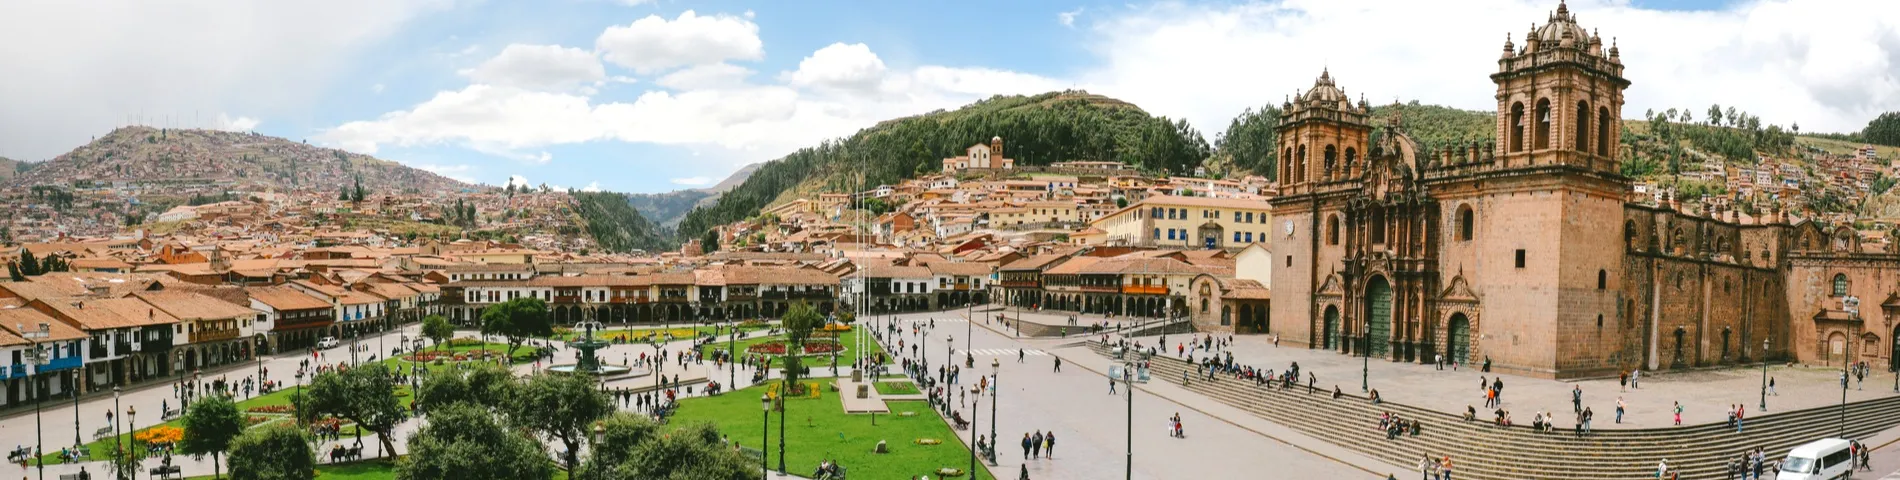 Cuzco - Standard